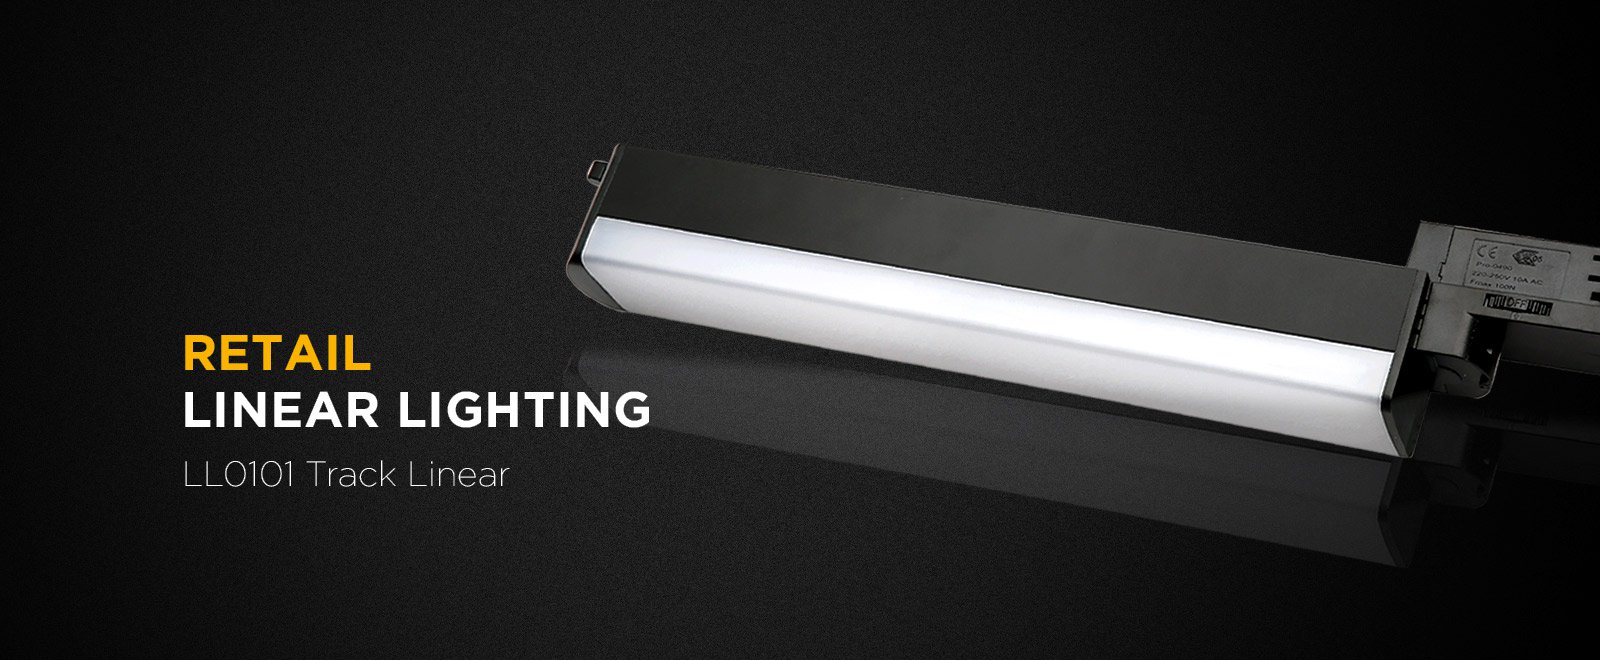 Retail Linear Lighting - LL0101 Track Linear